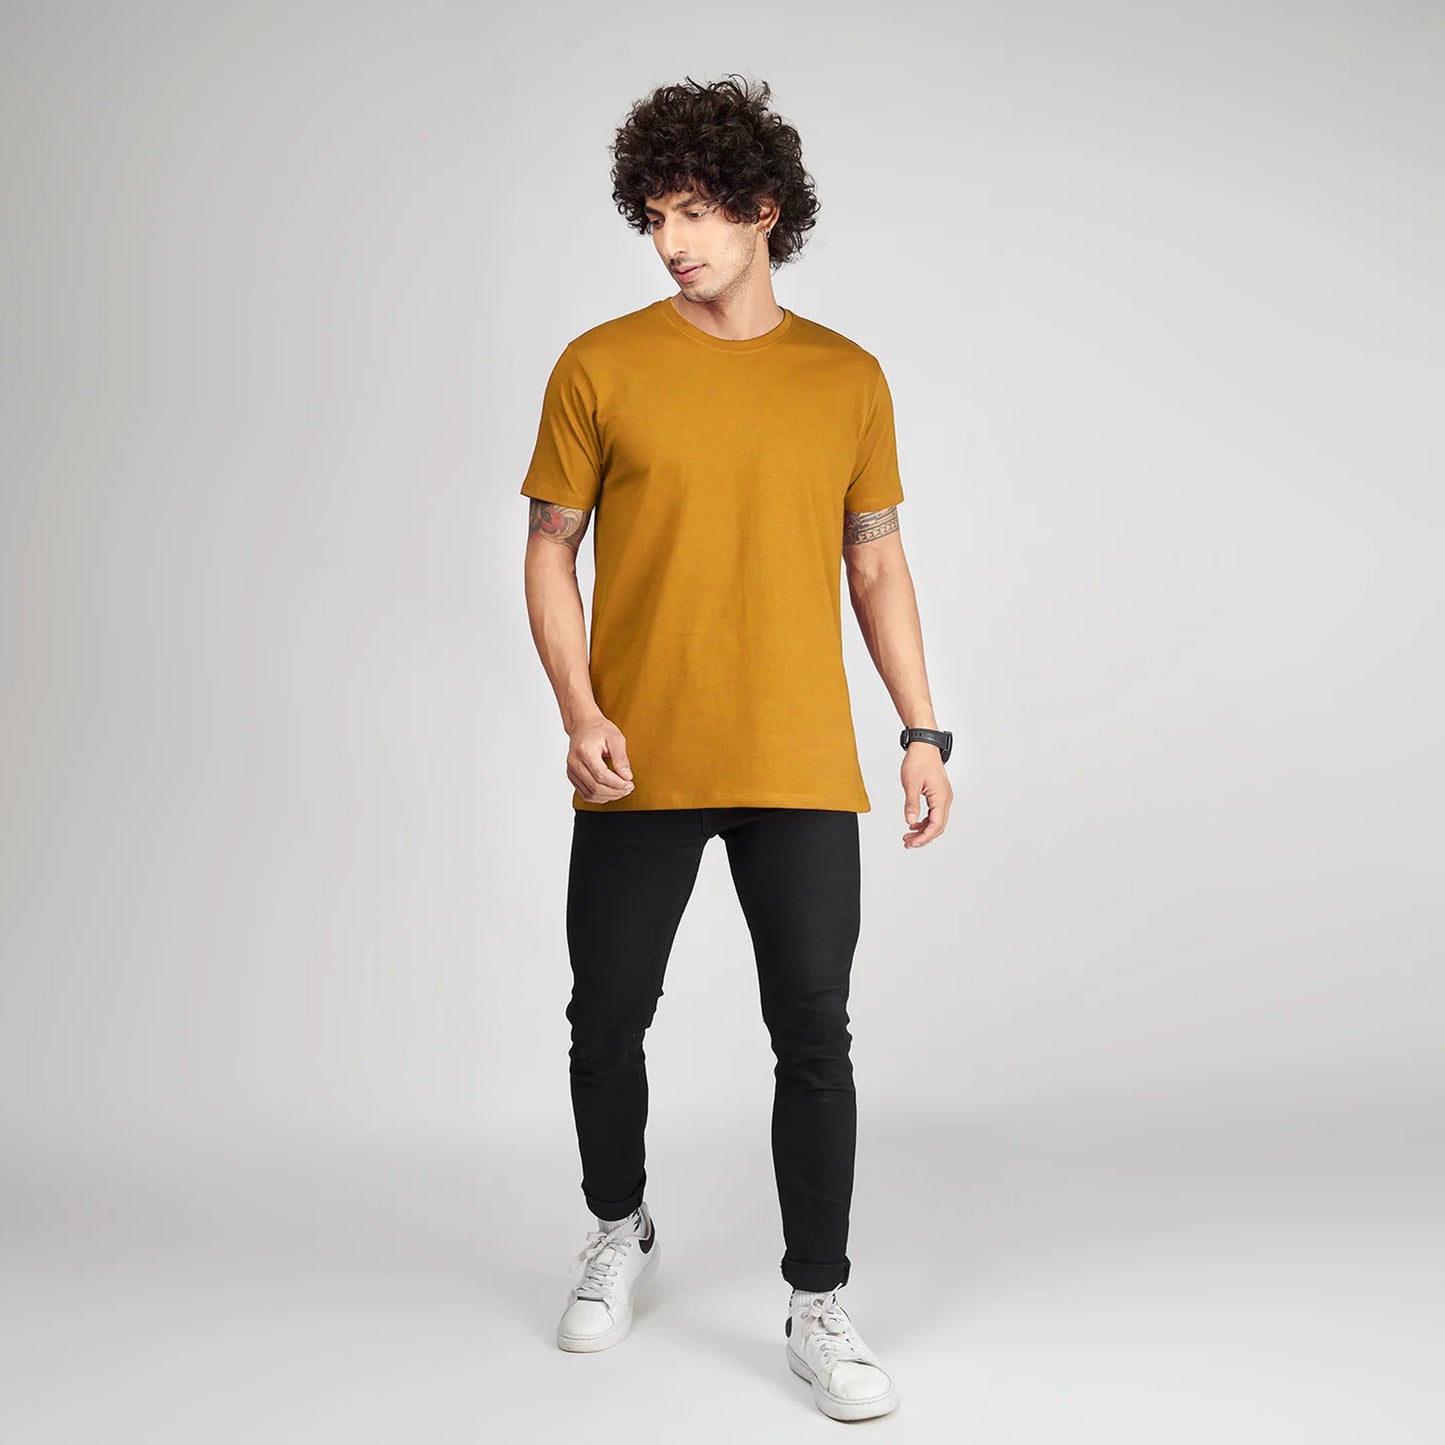 Basic Mustard Half Sleeves T-Shirt